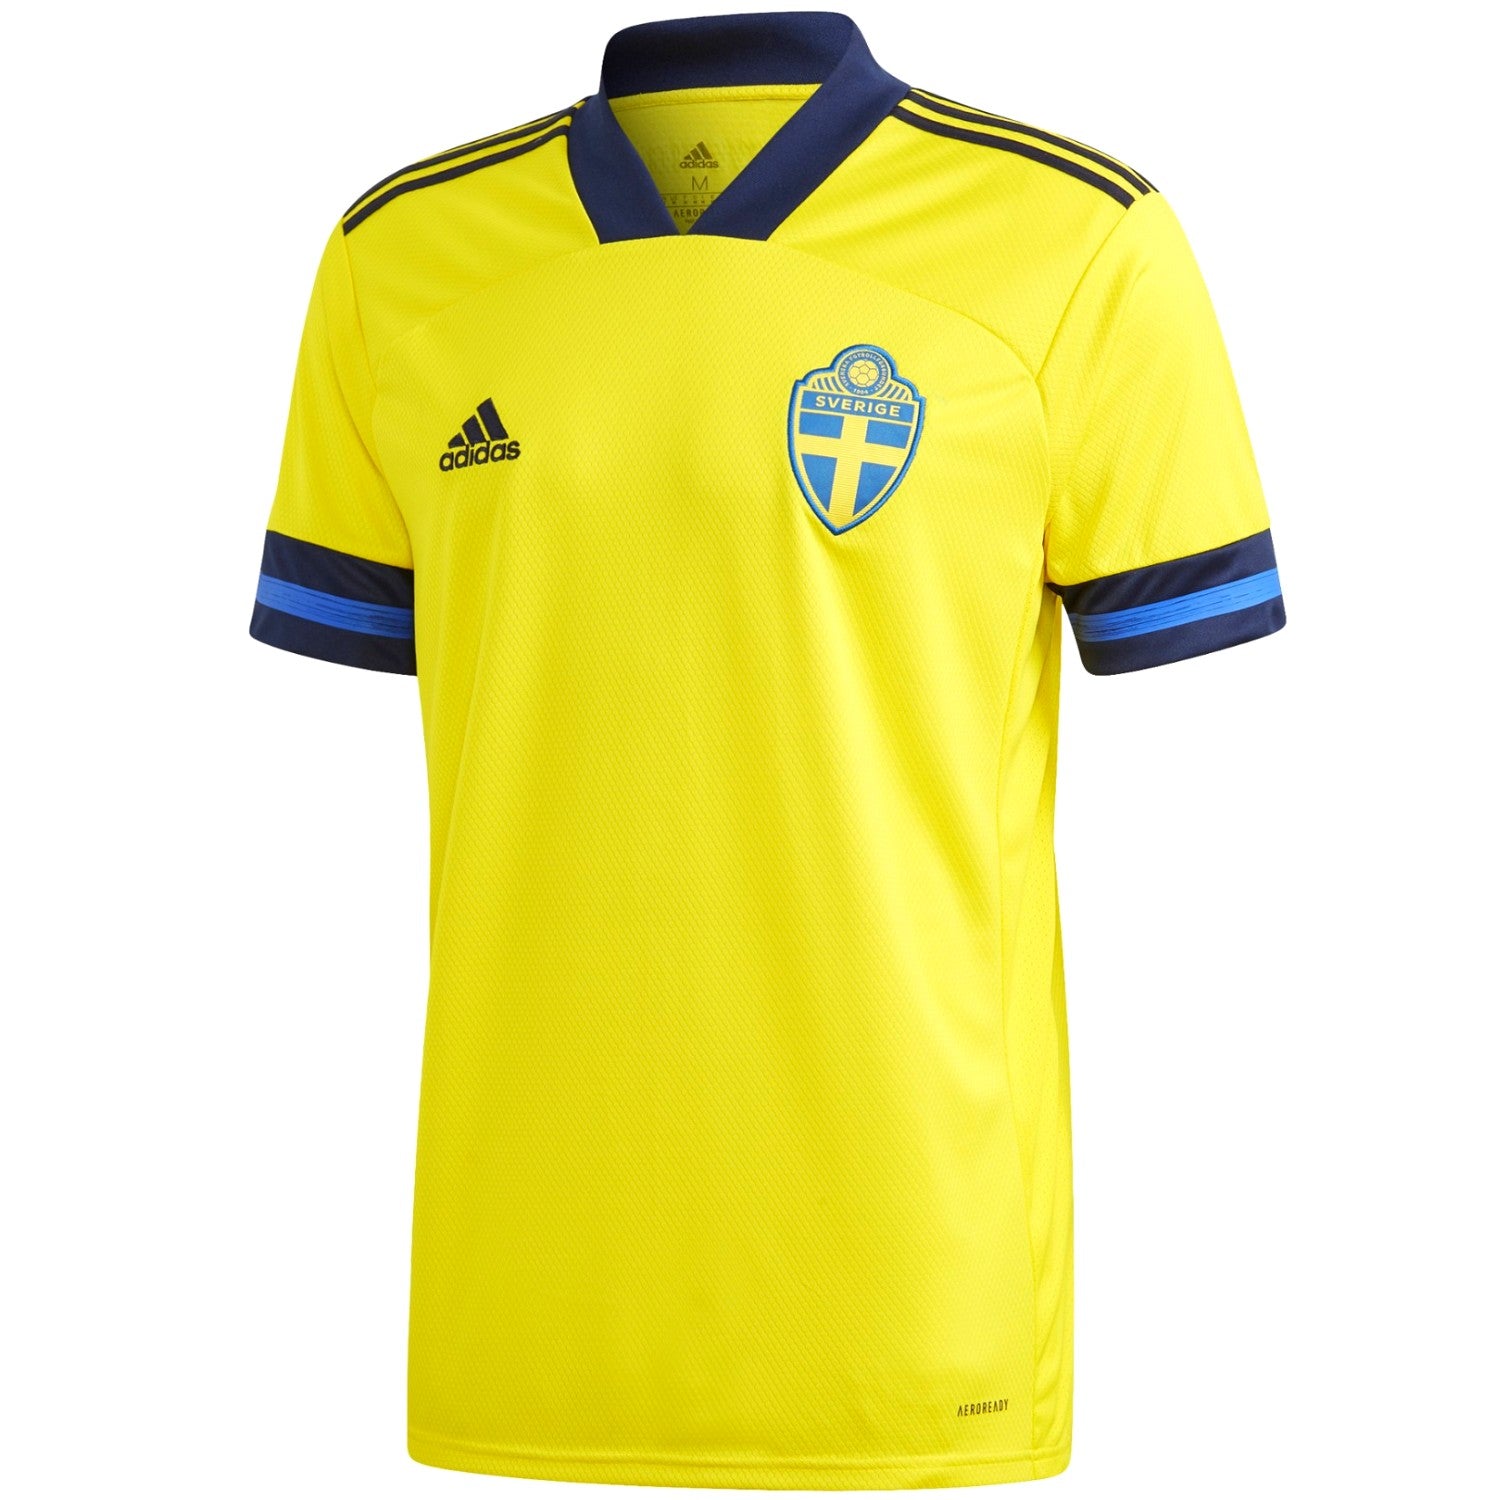 team Home soccer jersey 2020/21 - Adidas – SoccerTracksuits.com